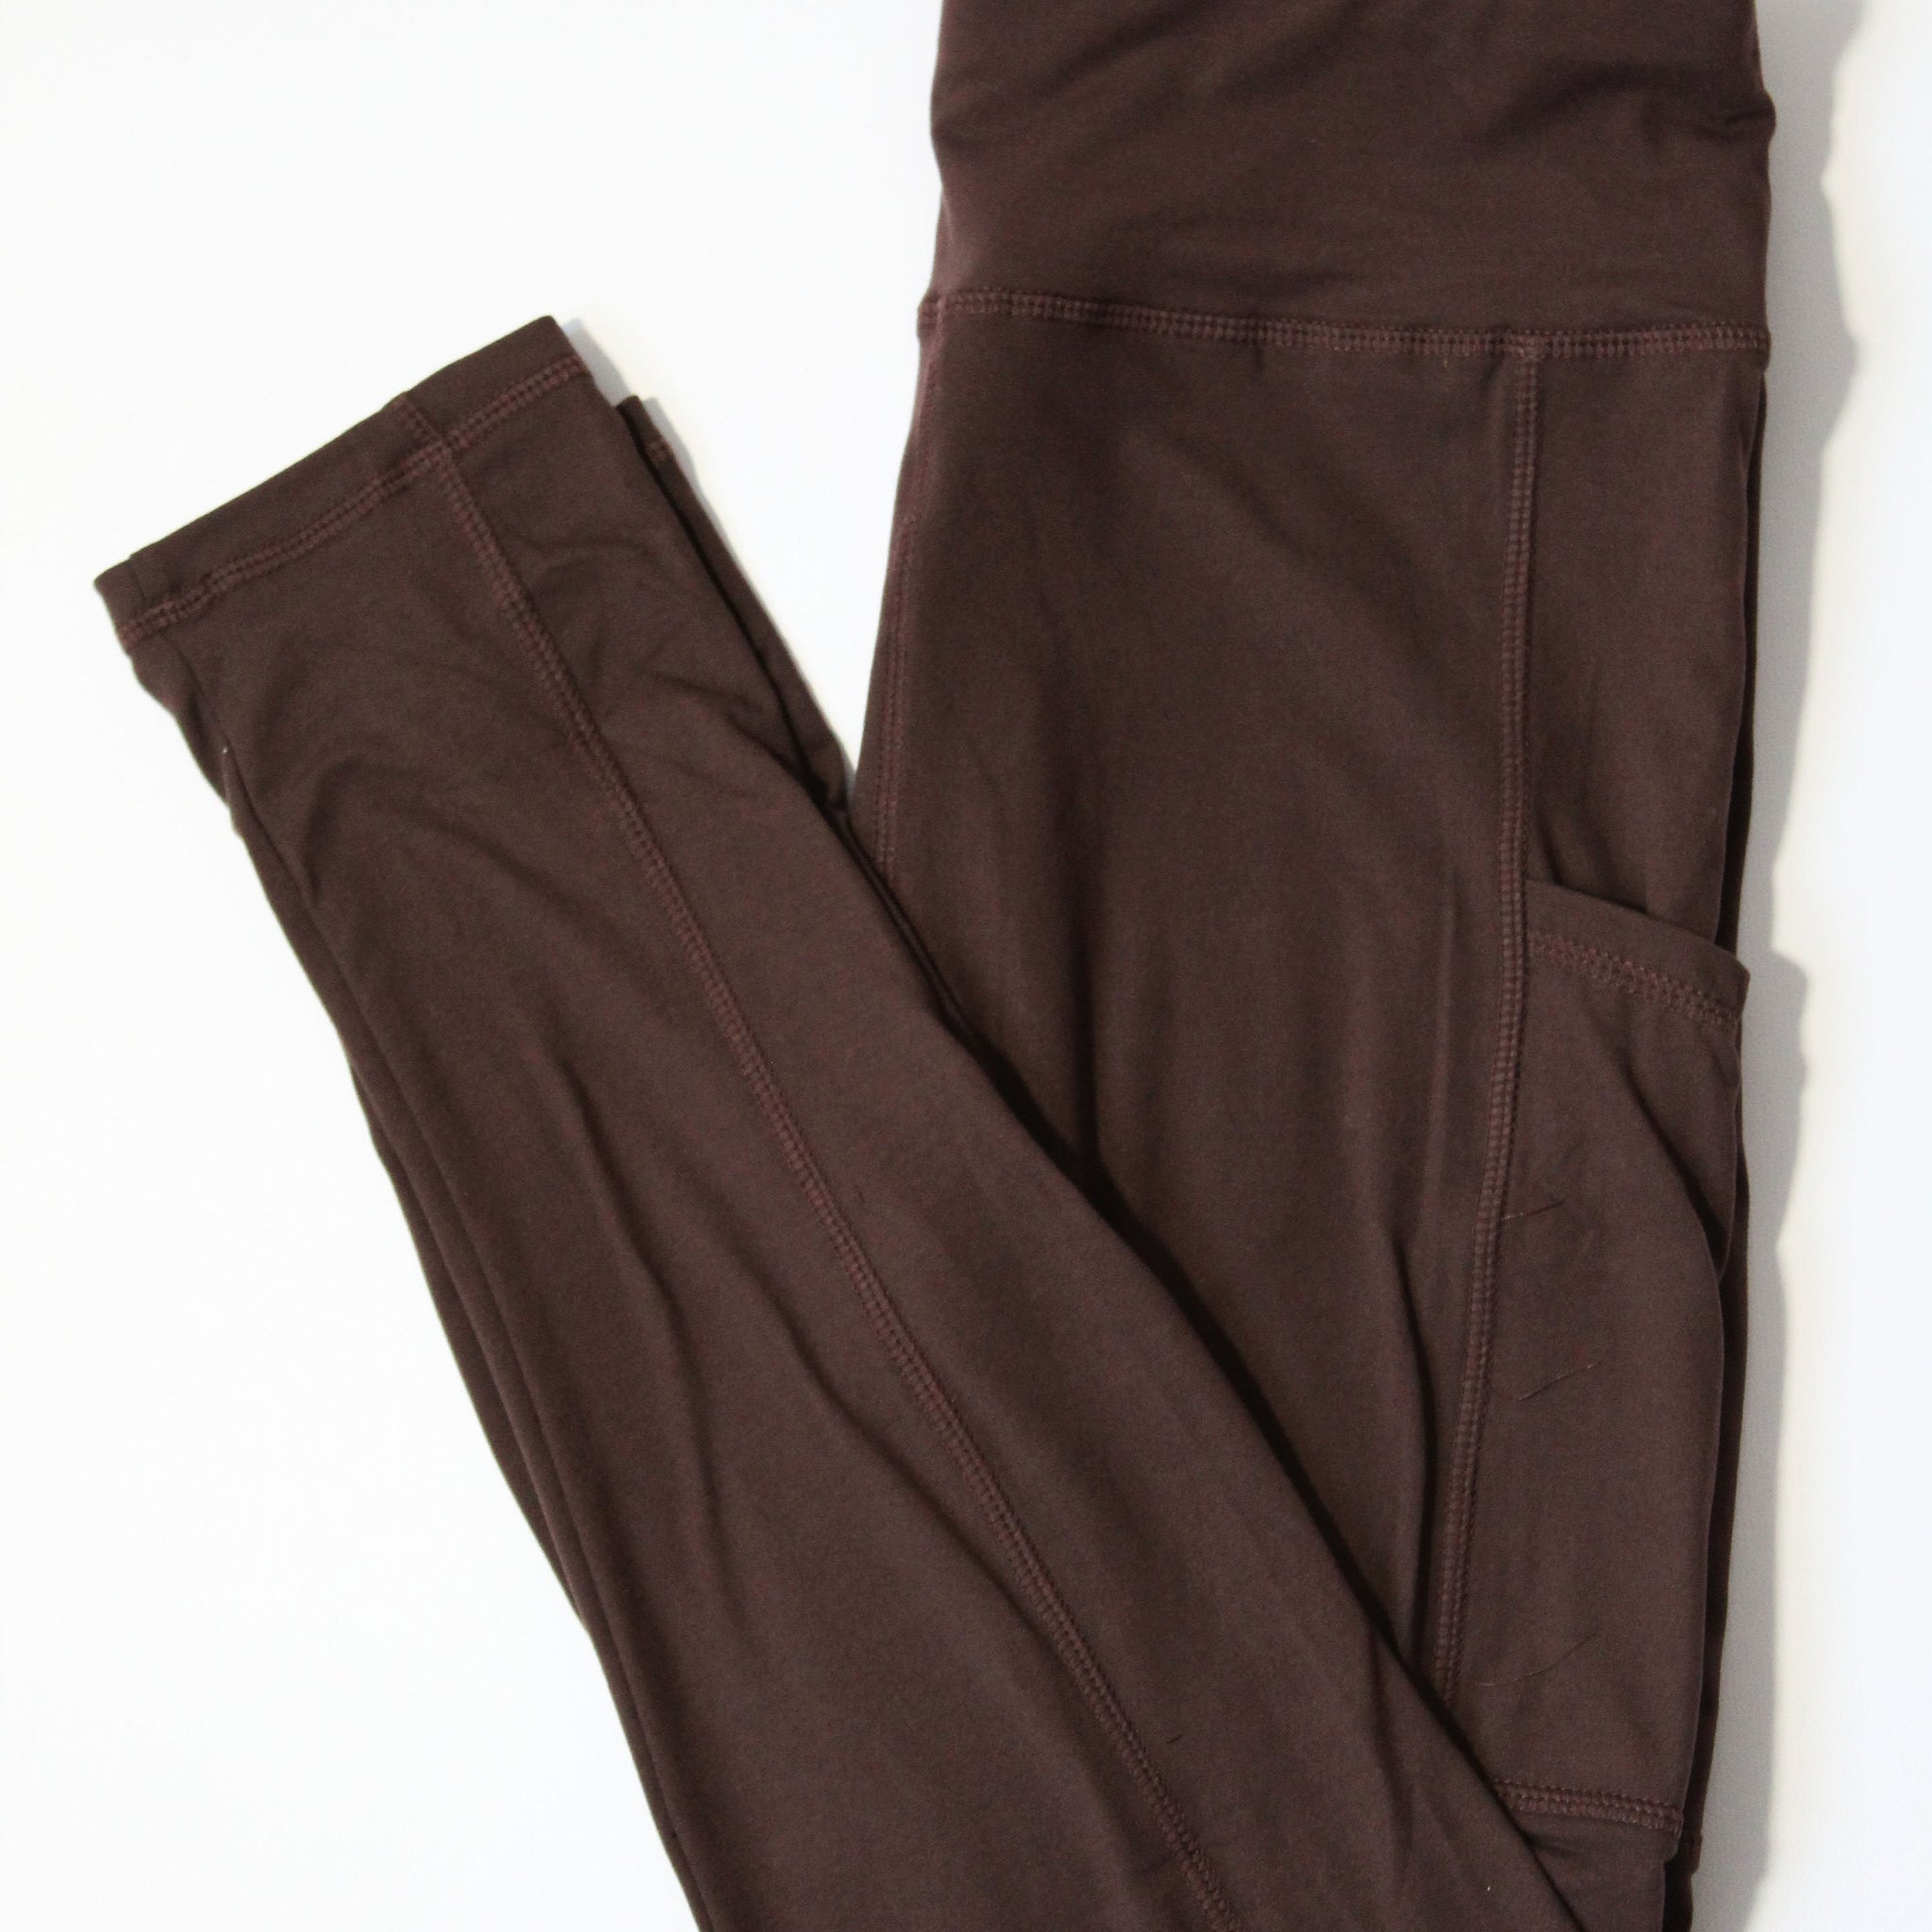 Magic Pocket Legging - Chocolate Full Length